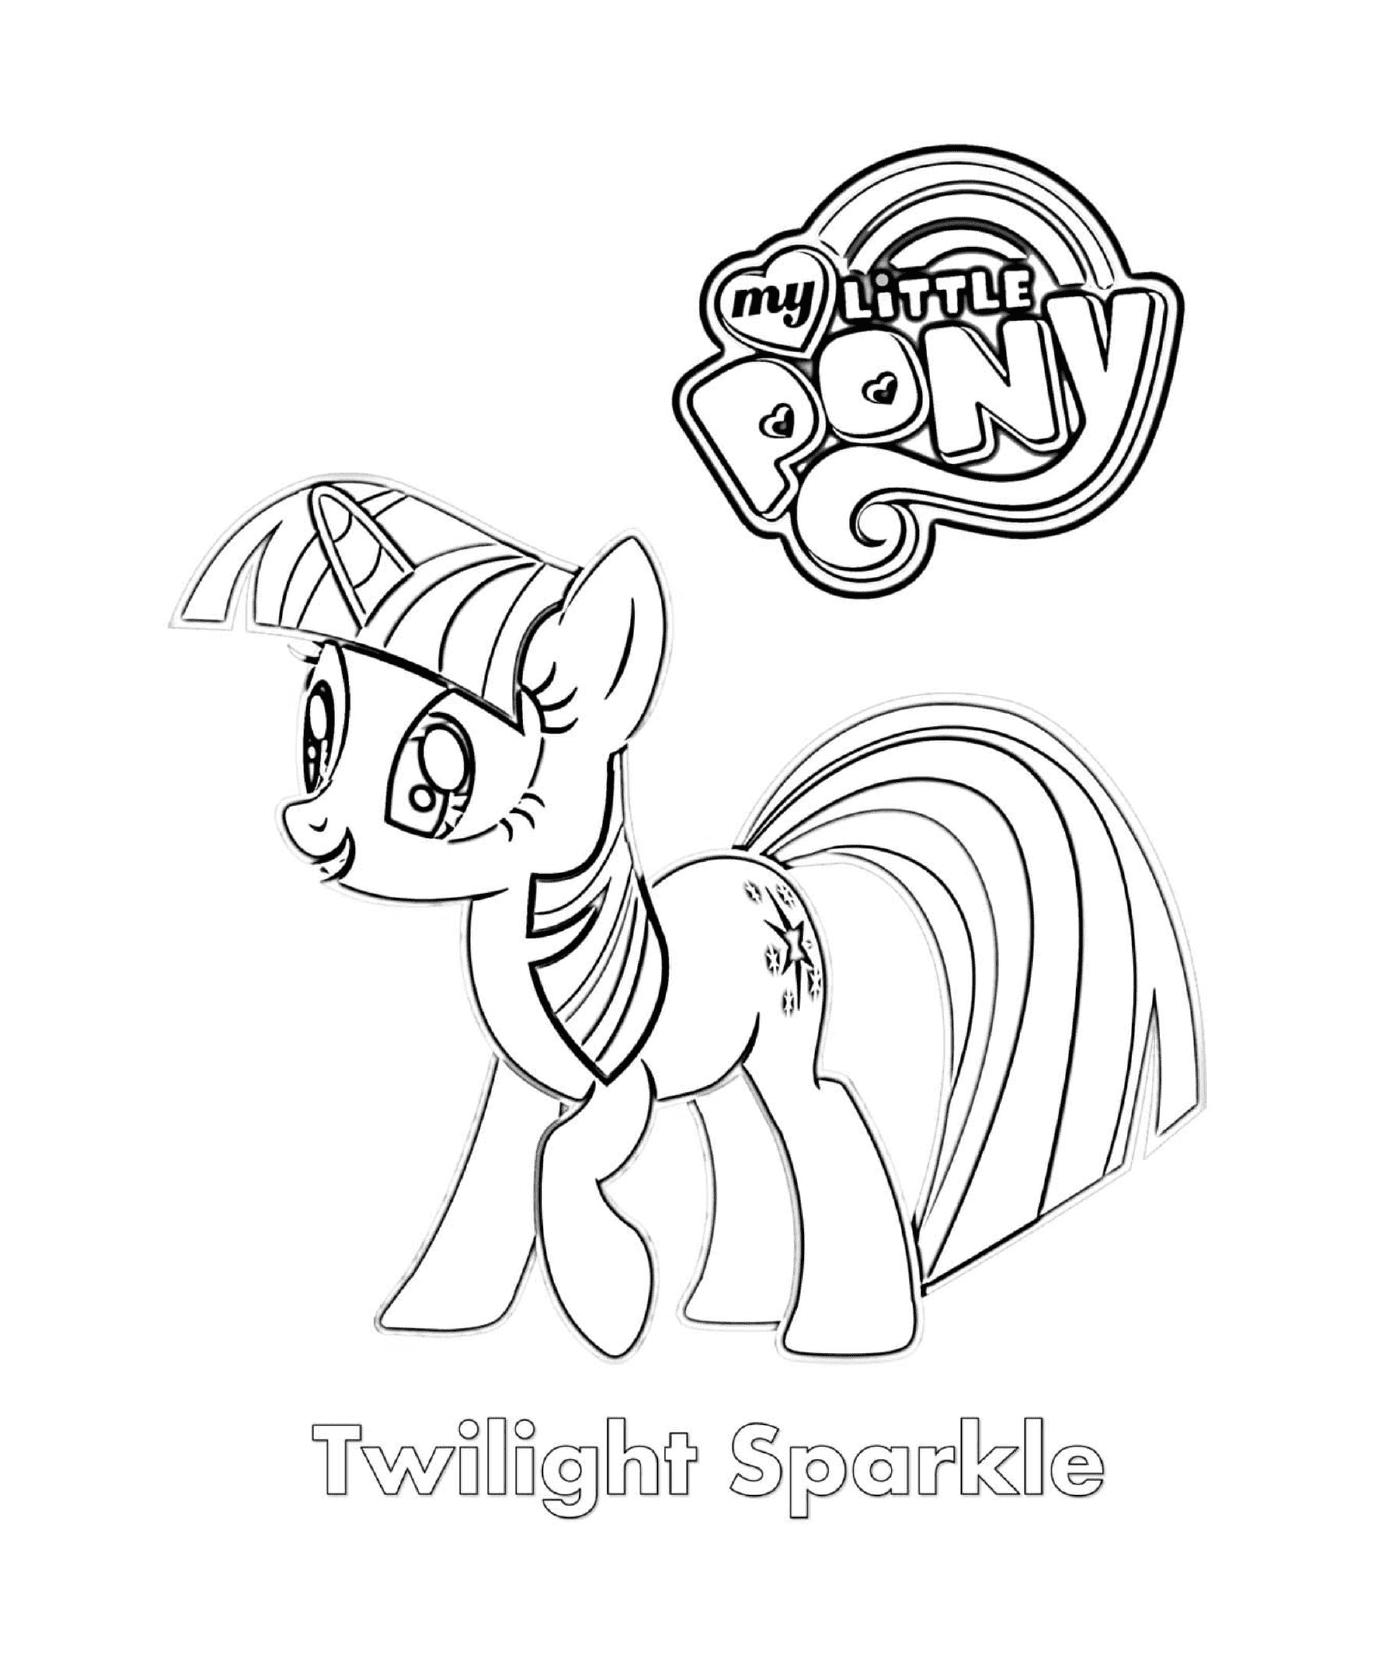  Twilight Sparkle, das Pony namens Twilight Sparkle 